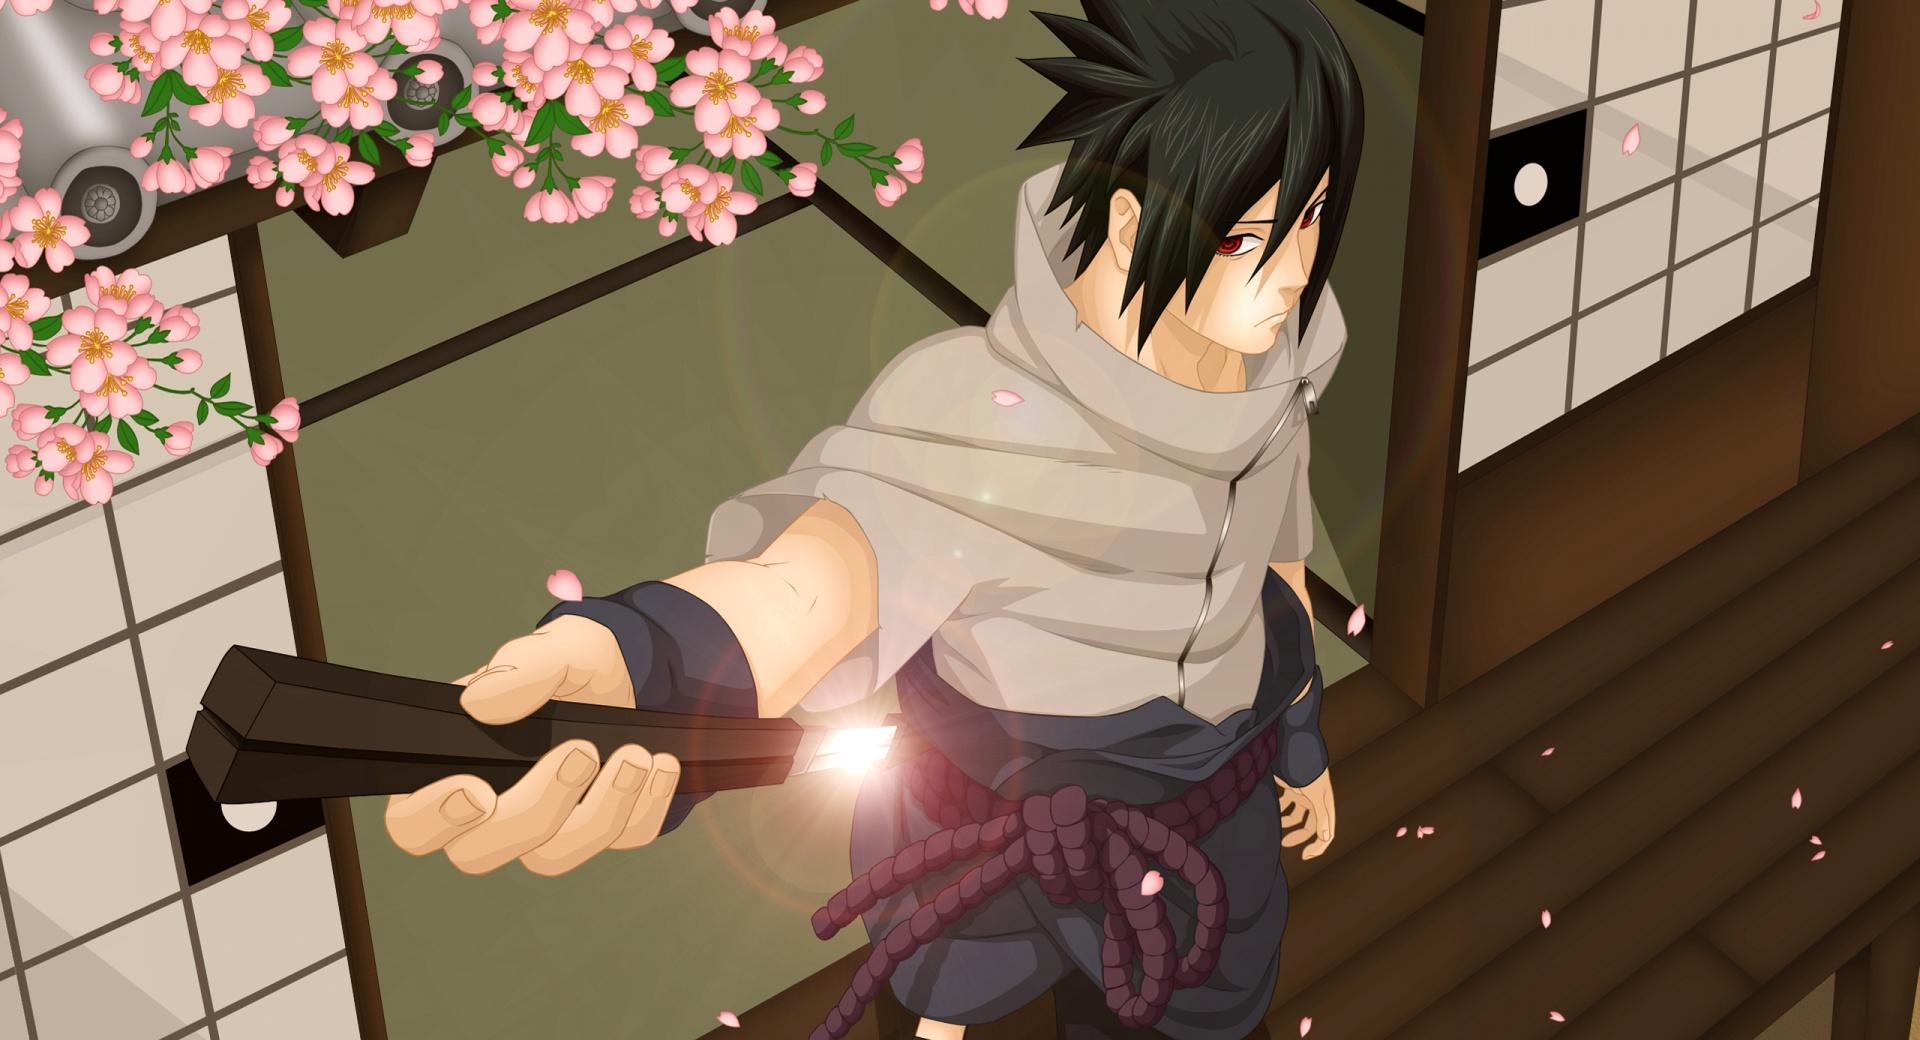 Naruto - Sasuke Before Battle at 2048 x 2048 iPad size wallpapers HD quality